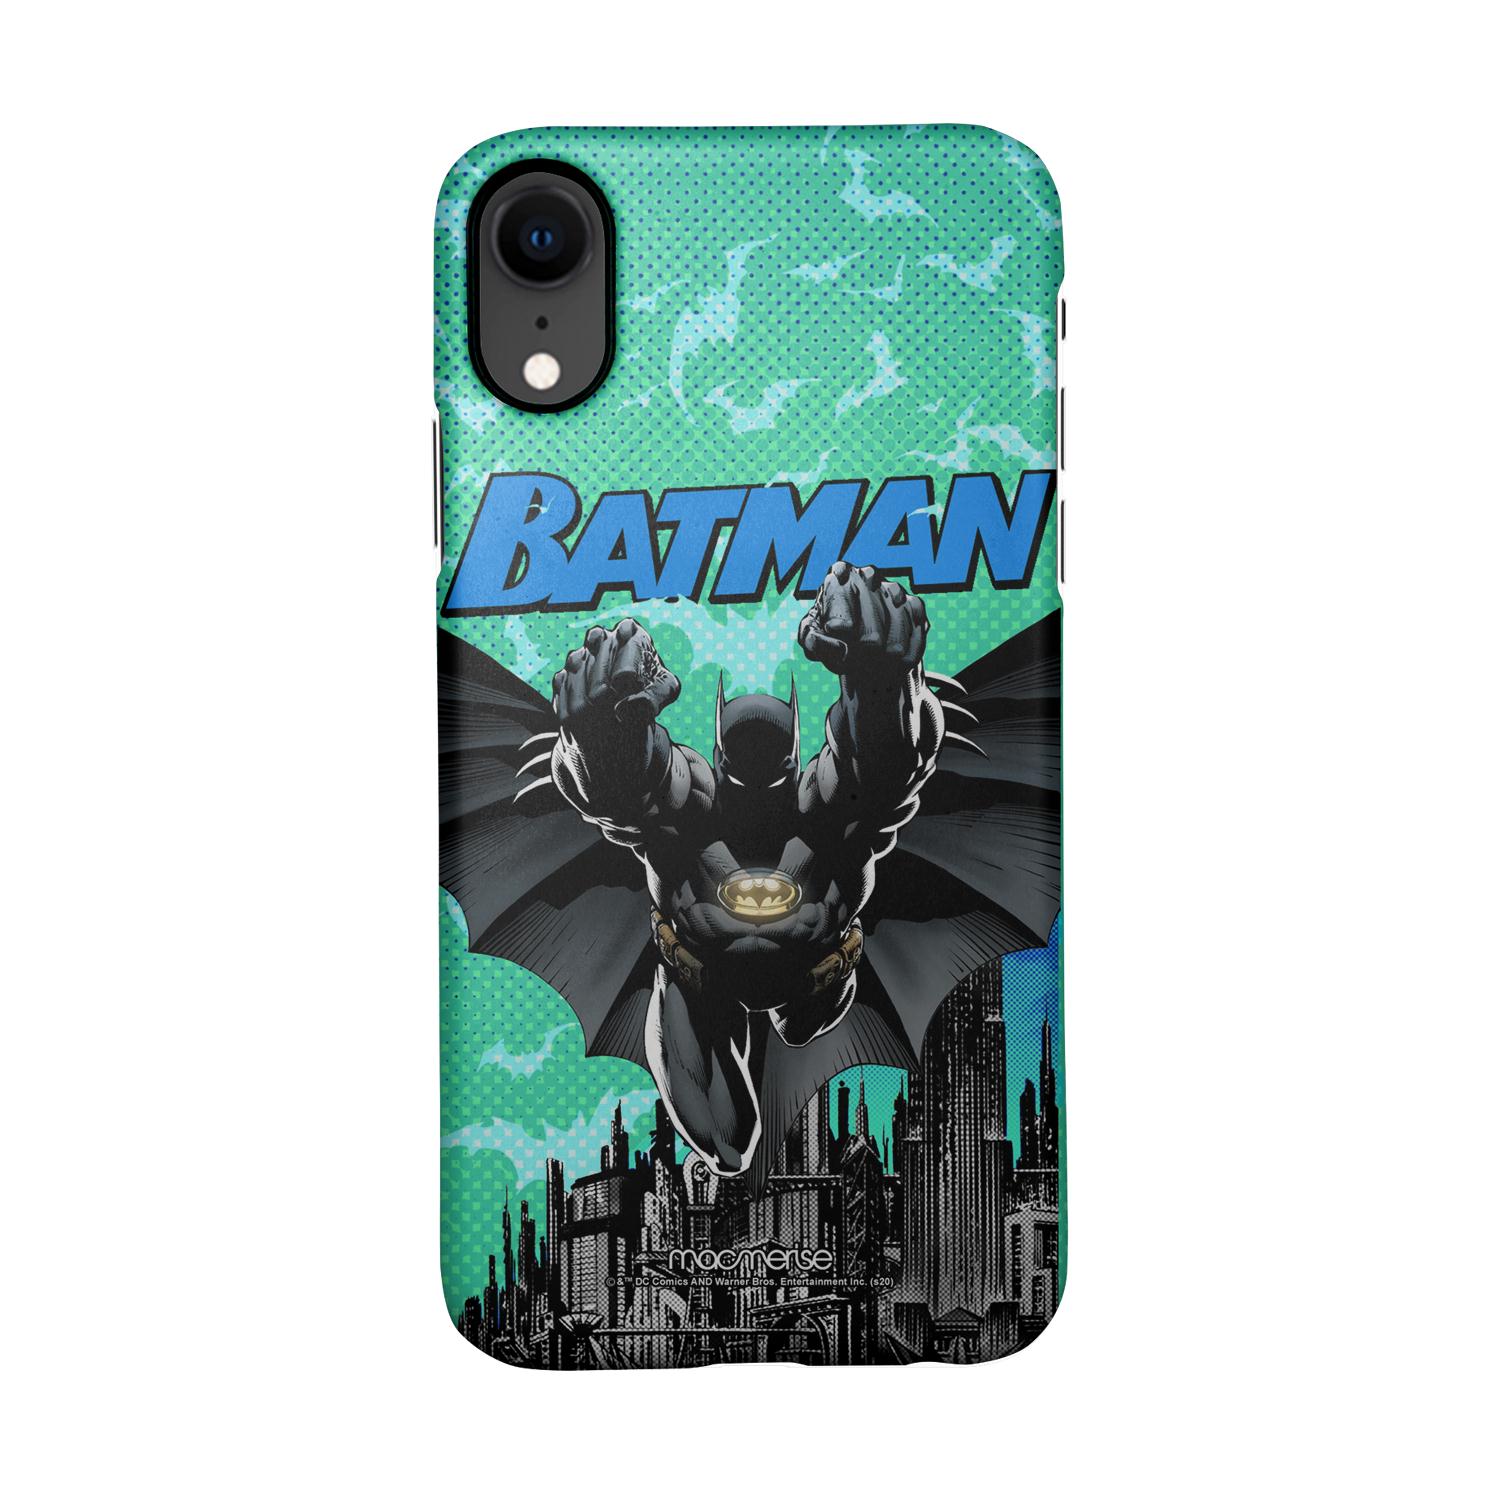 Buy Bat on the hunt - Sleek Phone Case for iPhone XR Online